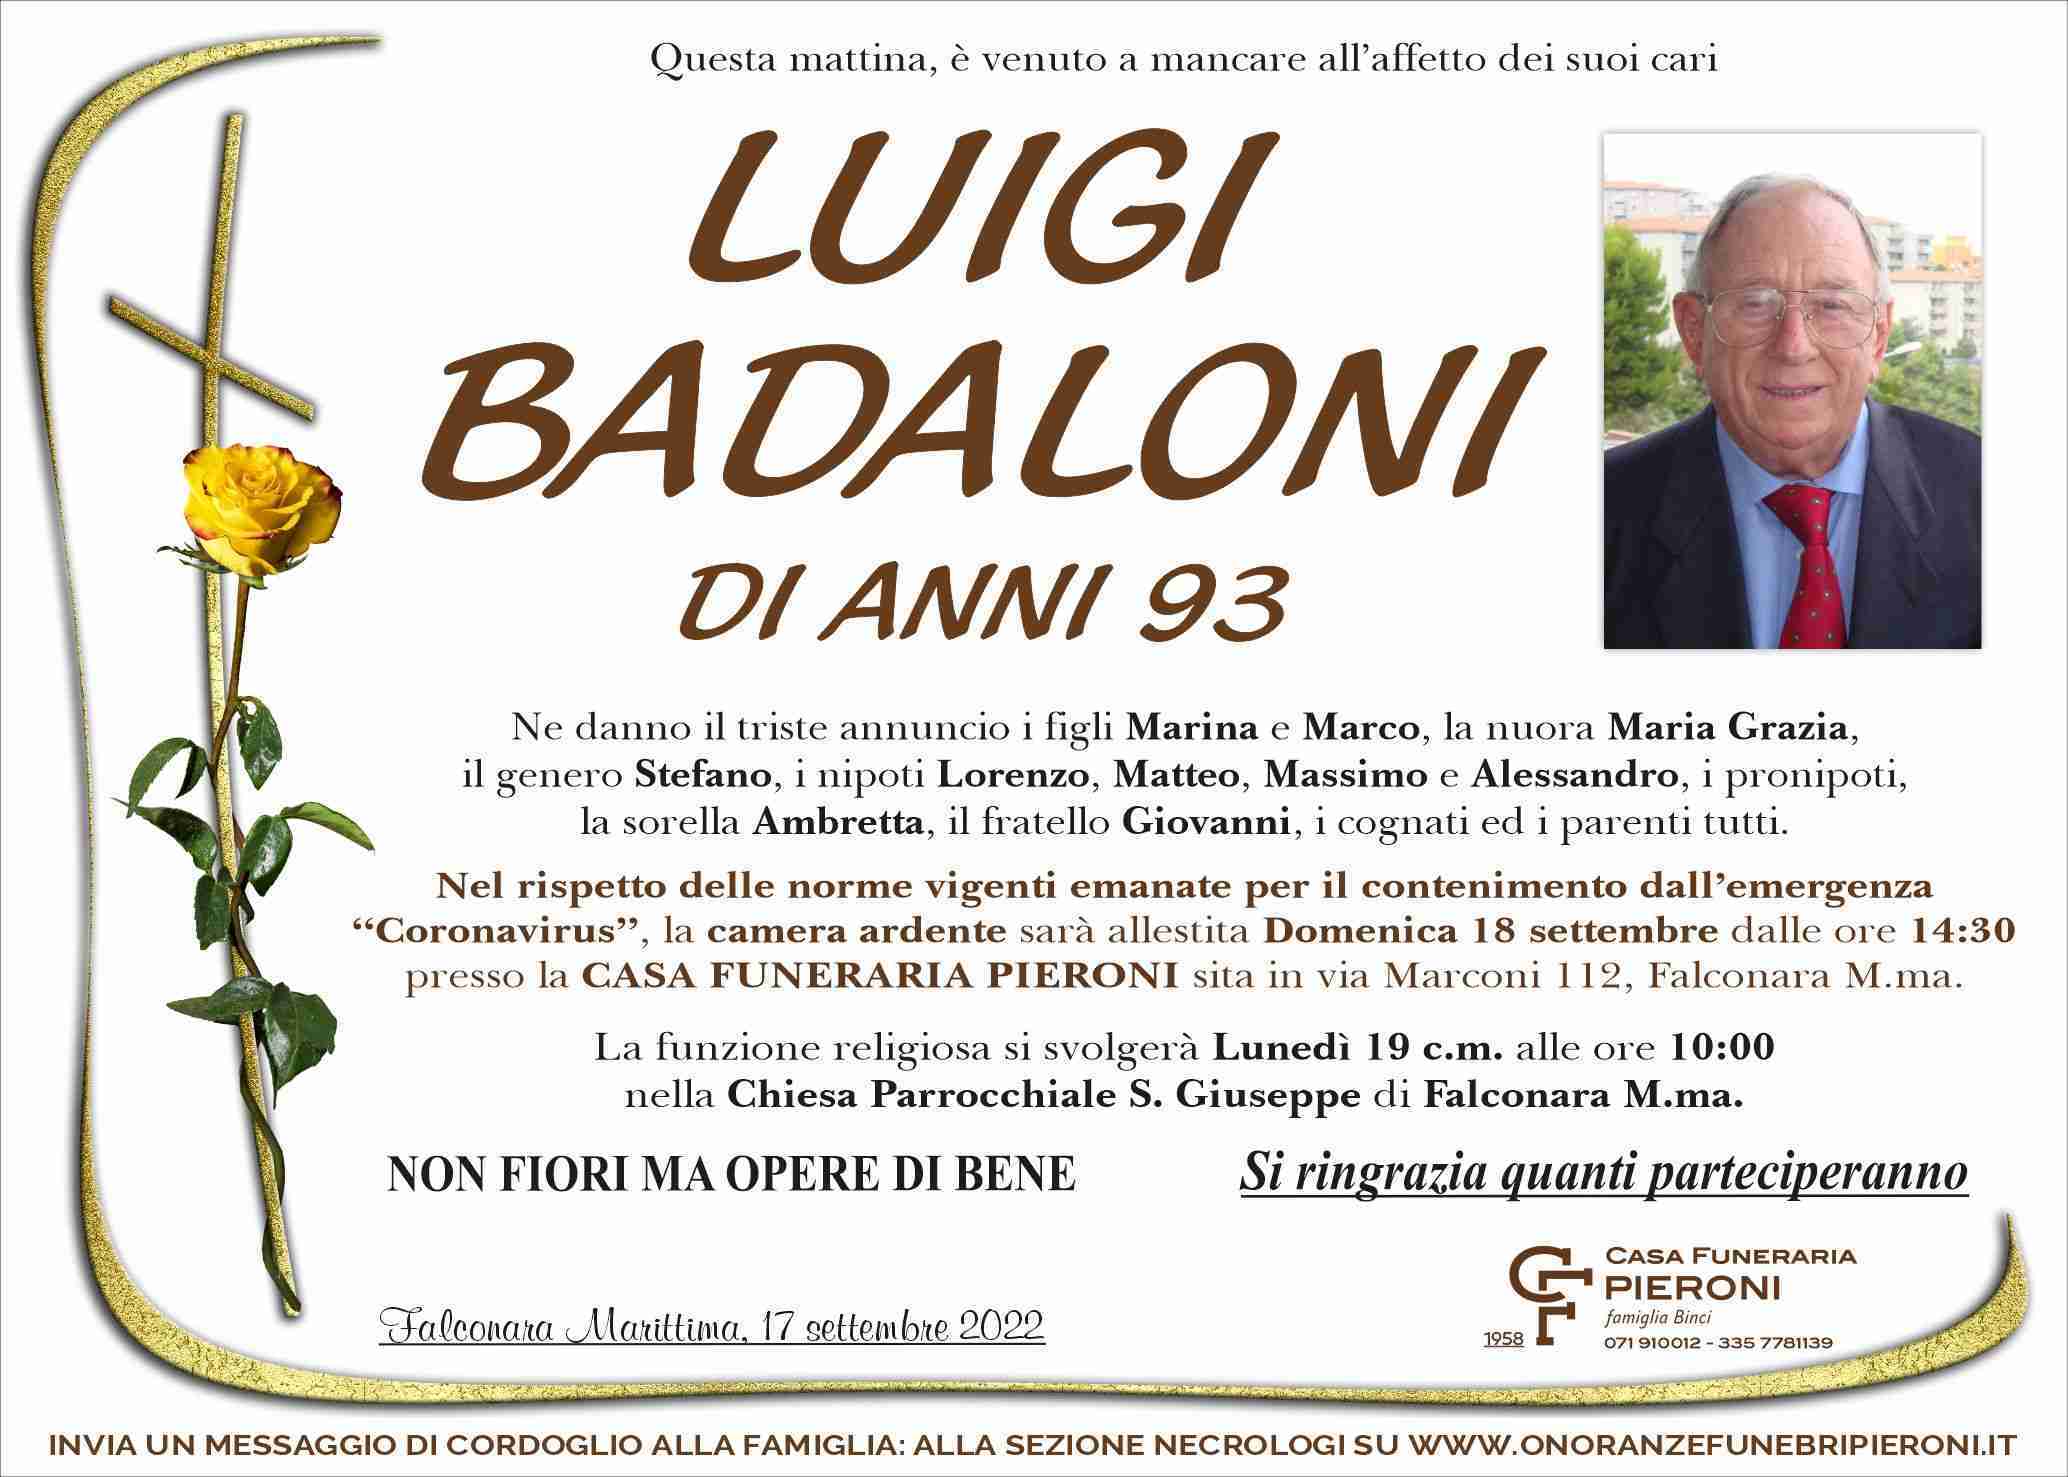 Luigi Badaloni